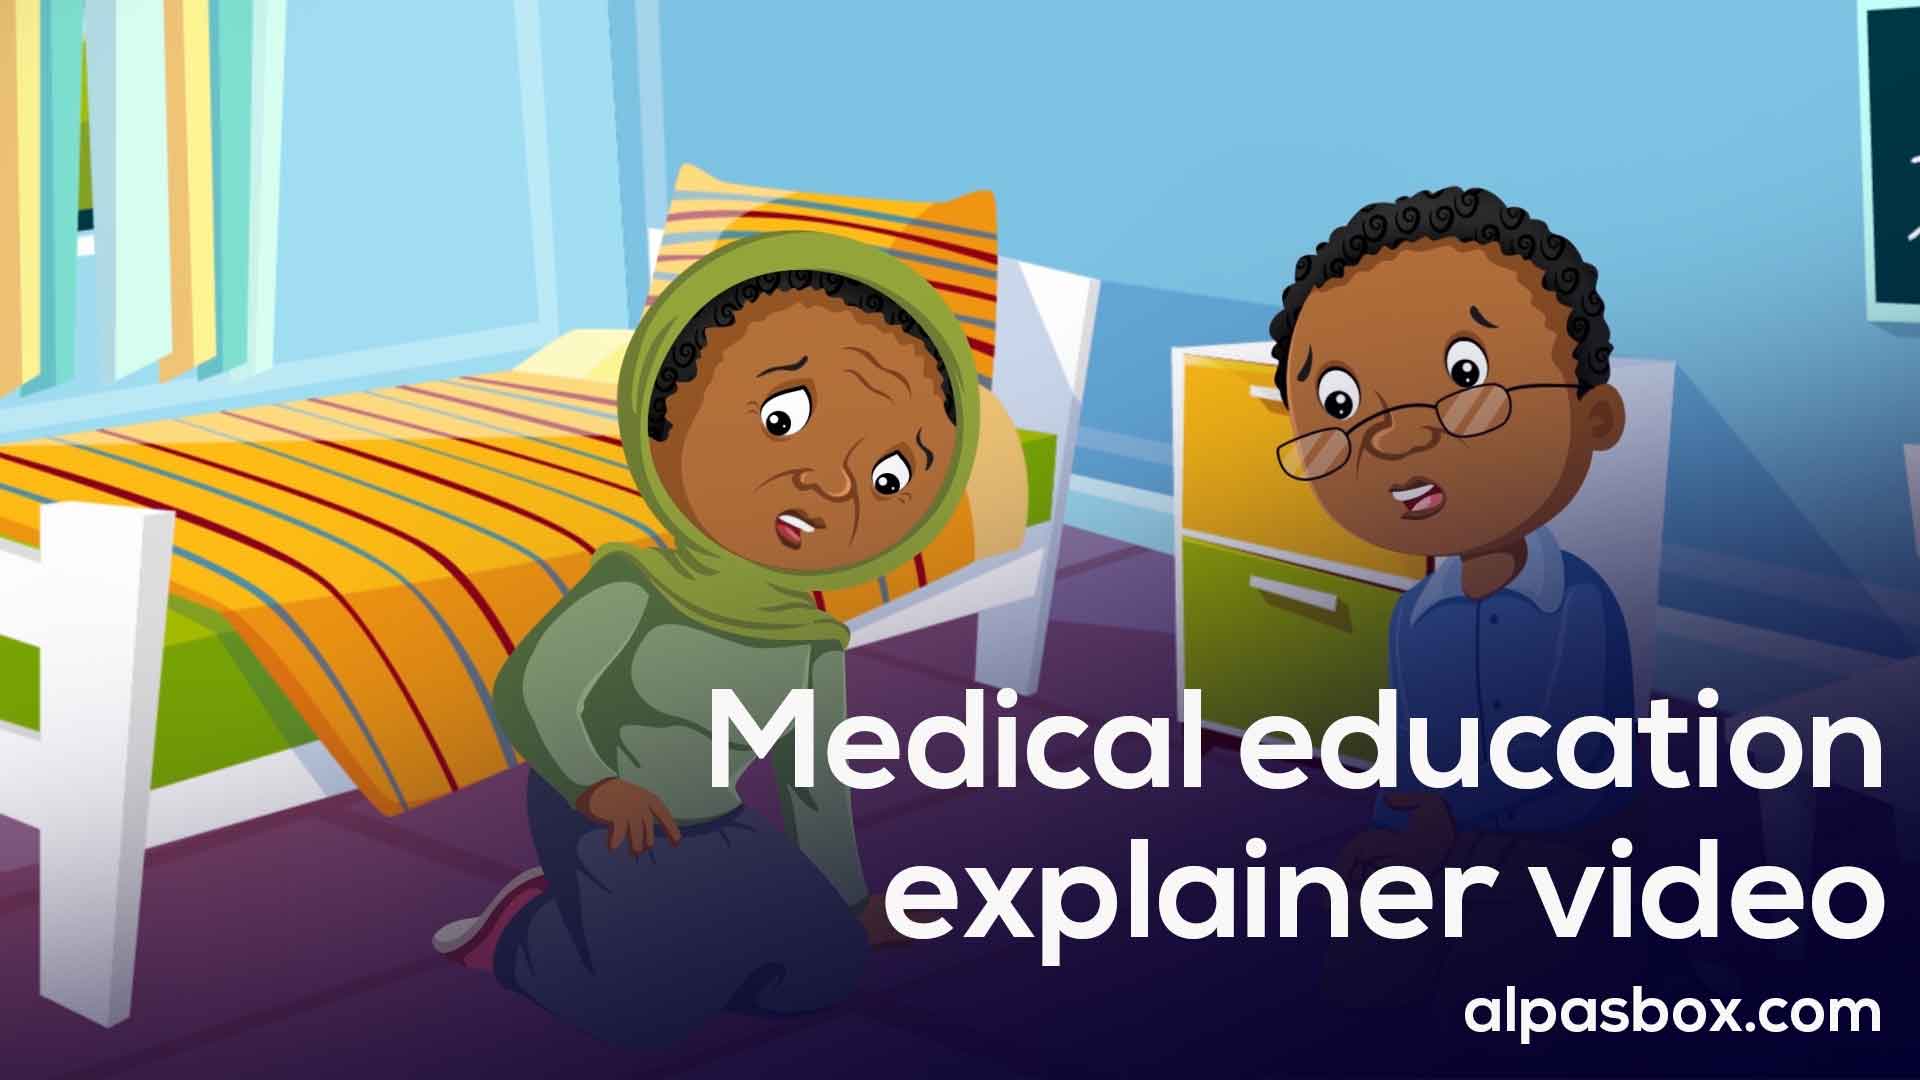 Medical education explainer video